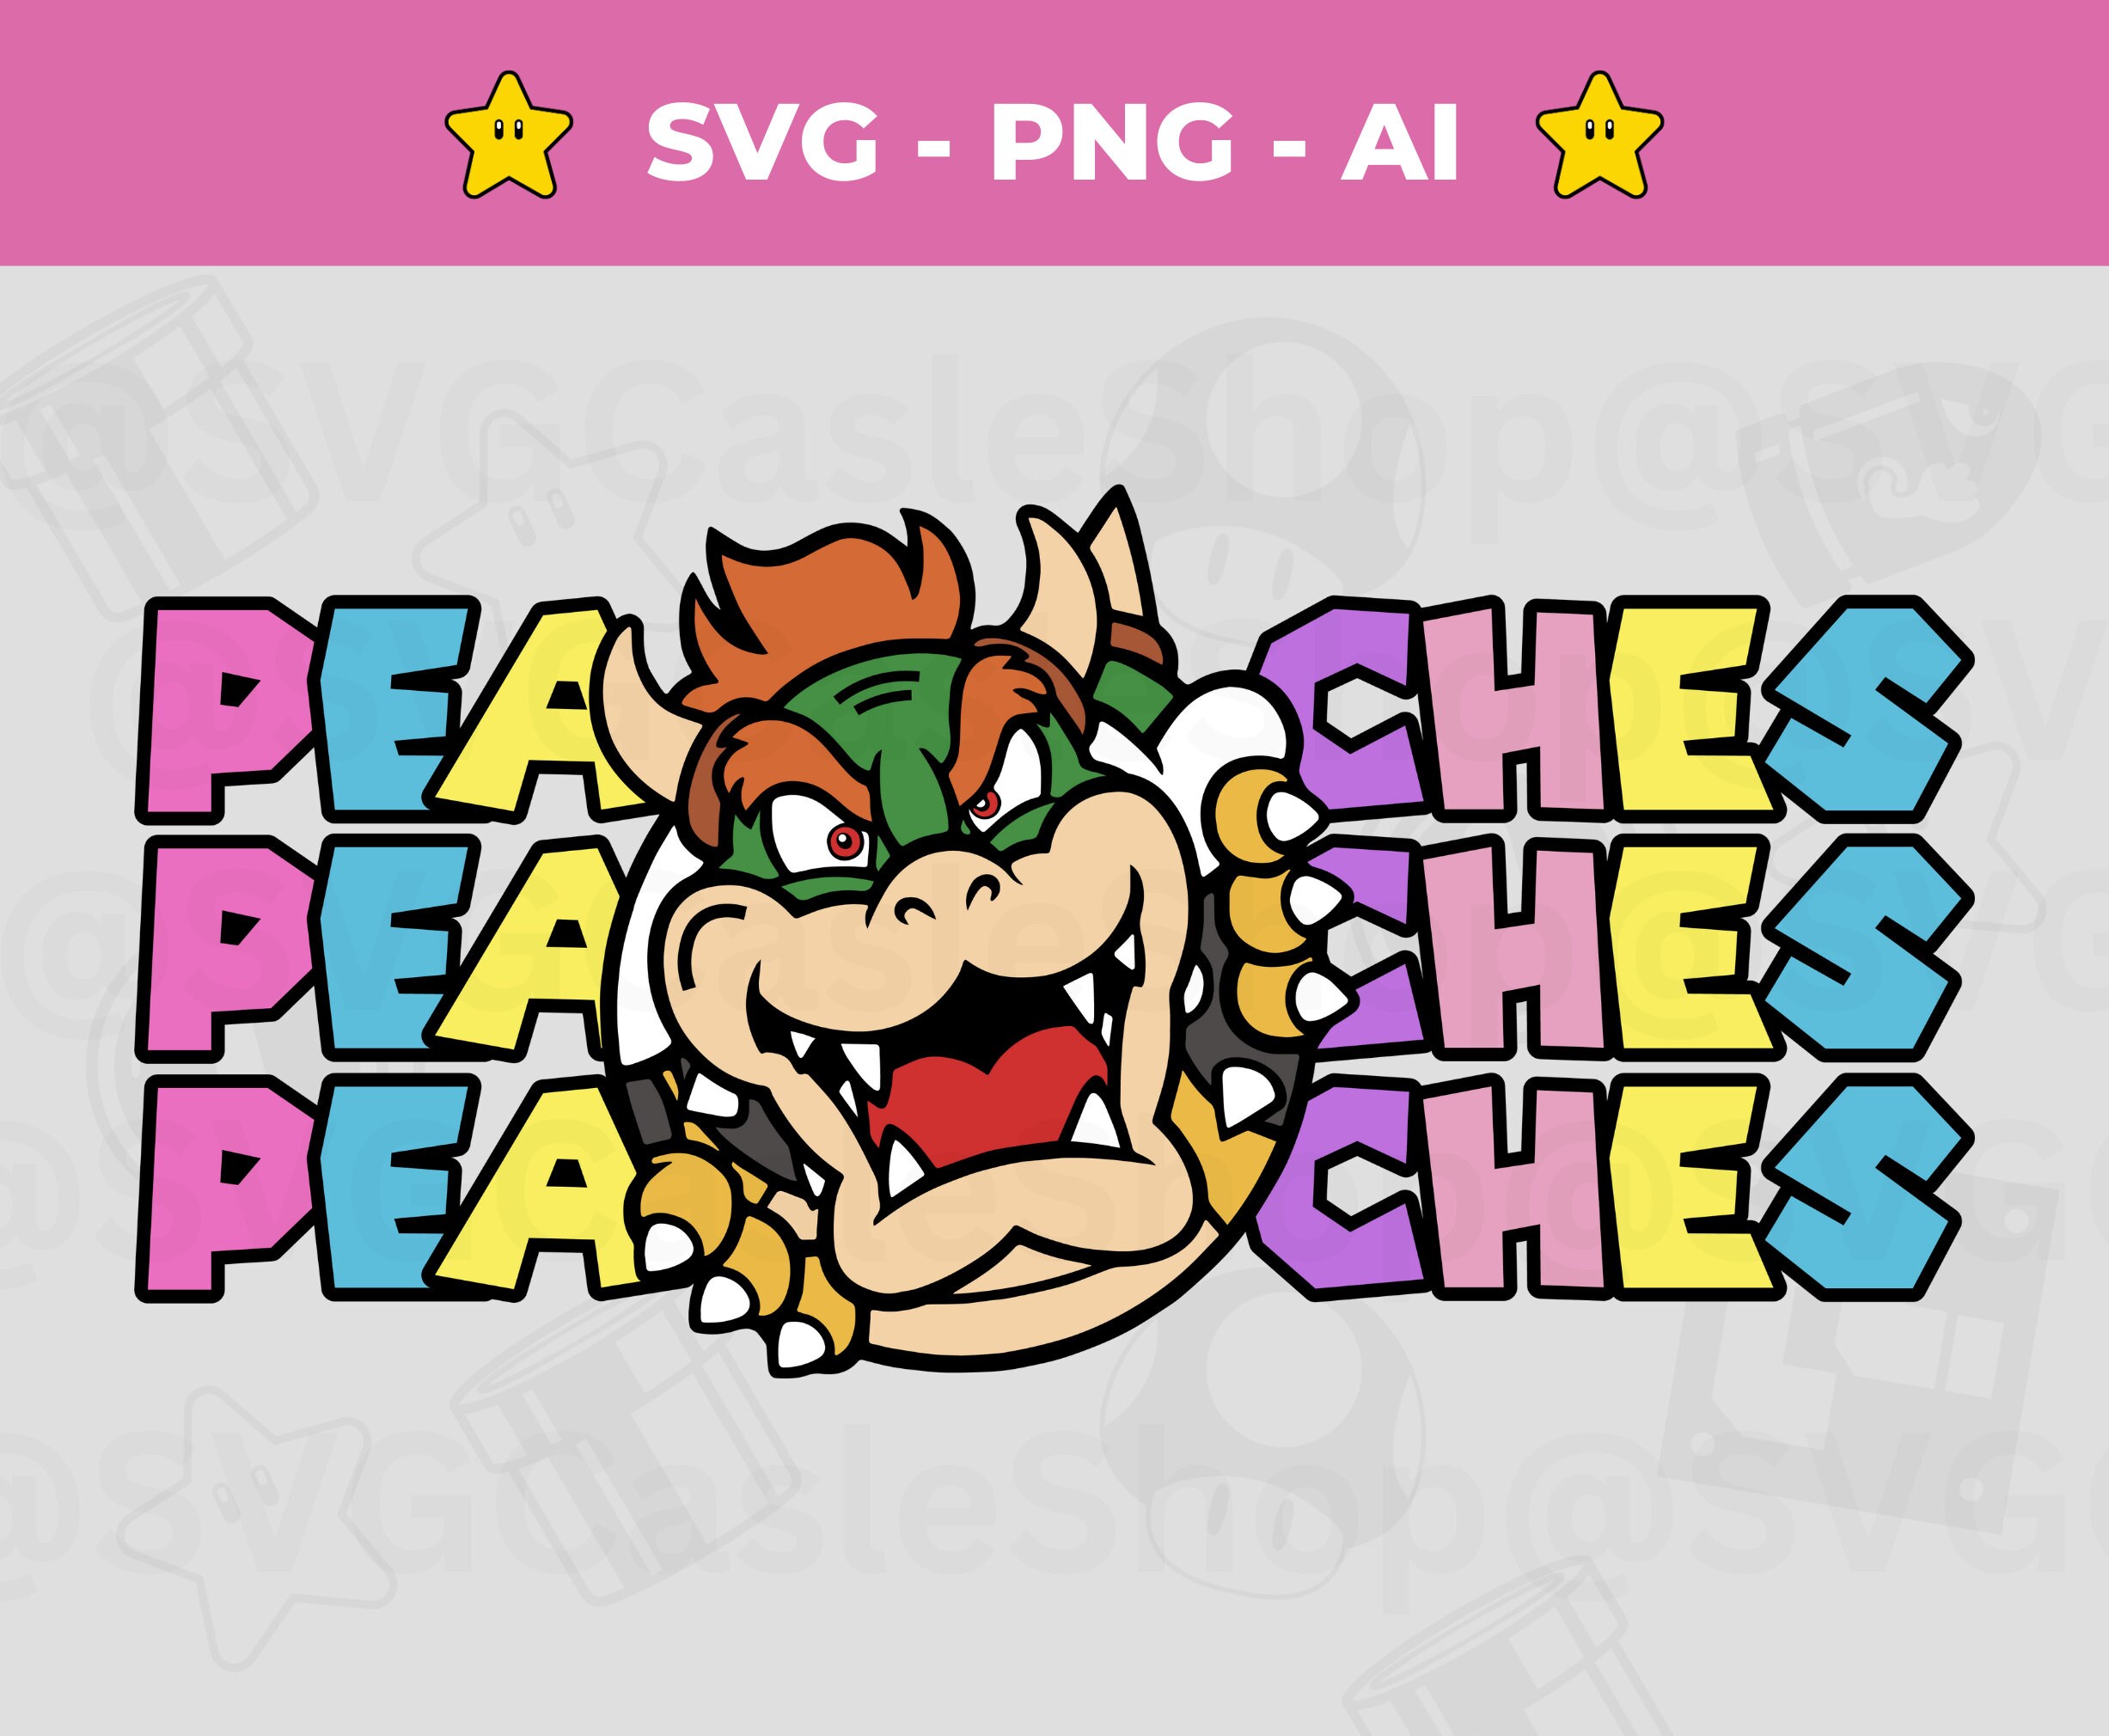 Bowser Jr. Super Mario Bros. Nintendo Switch, bowser transparent background  PNG clipart